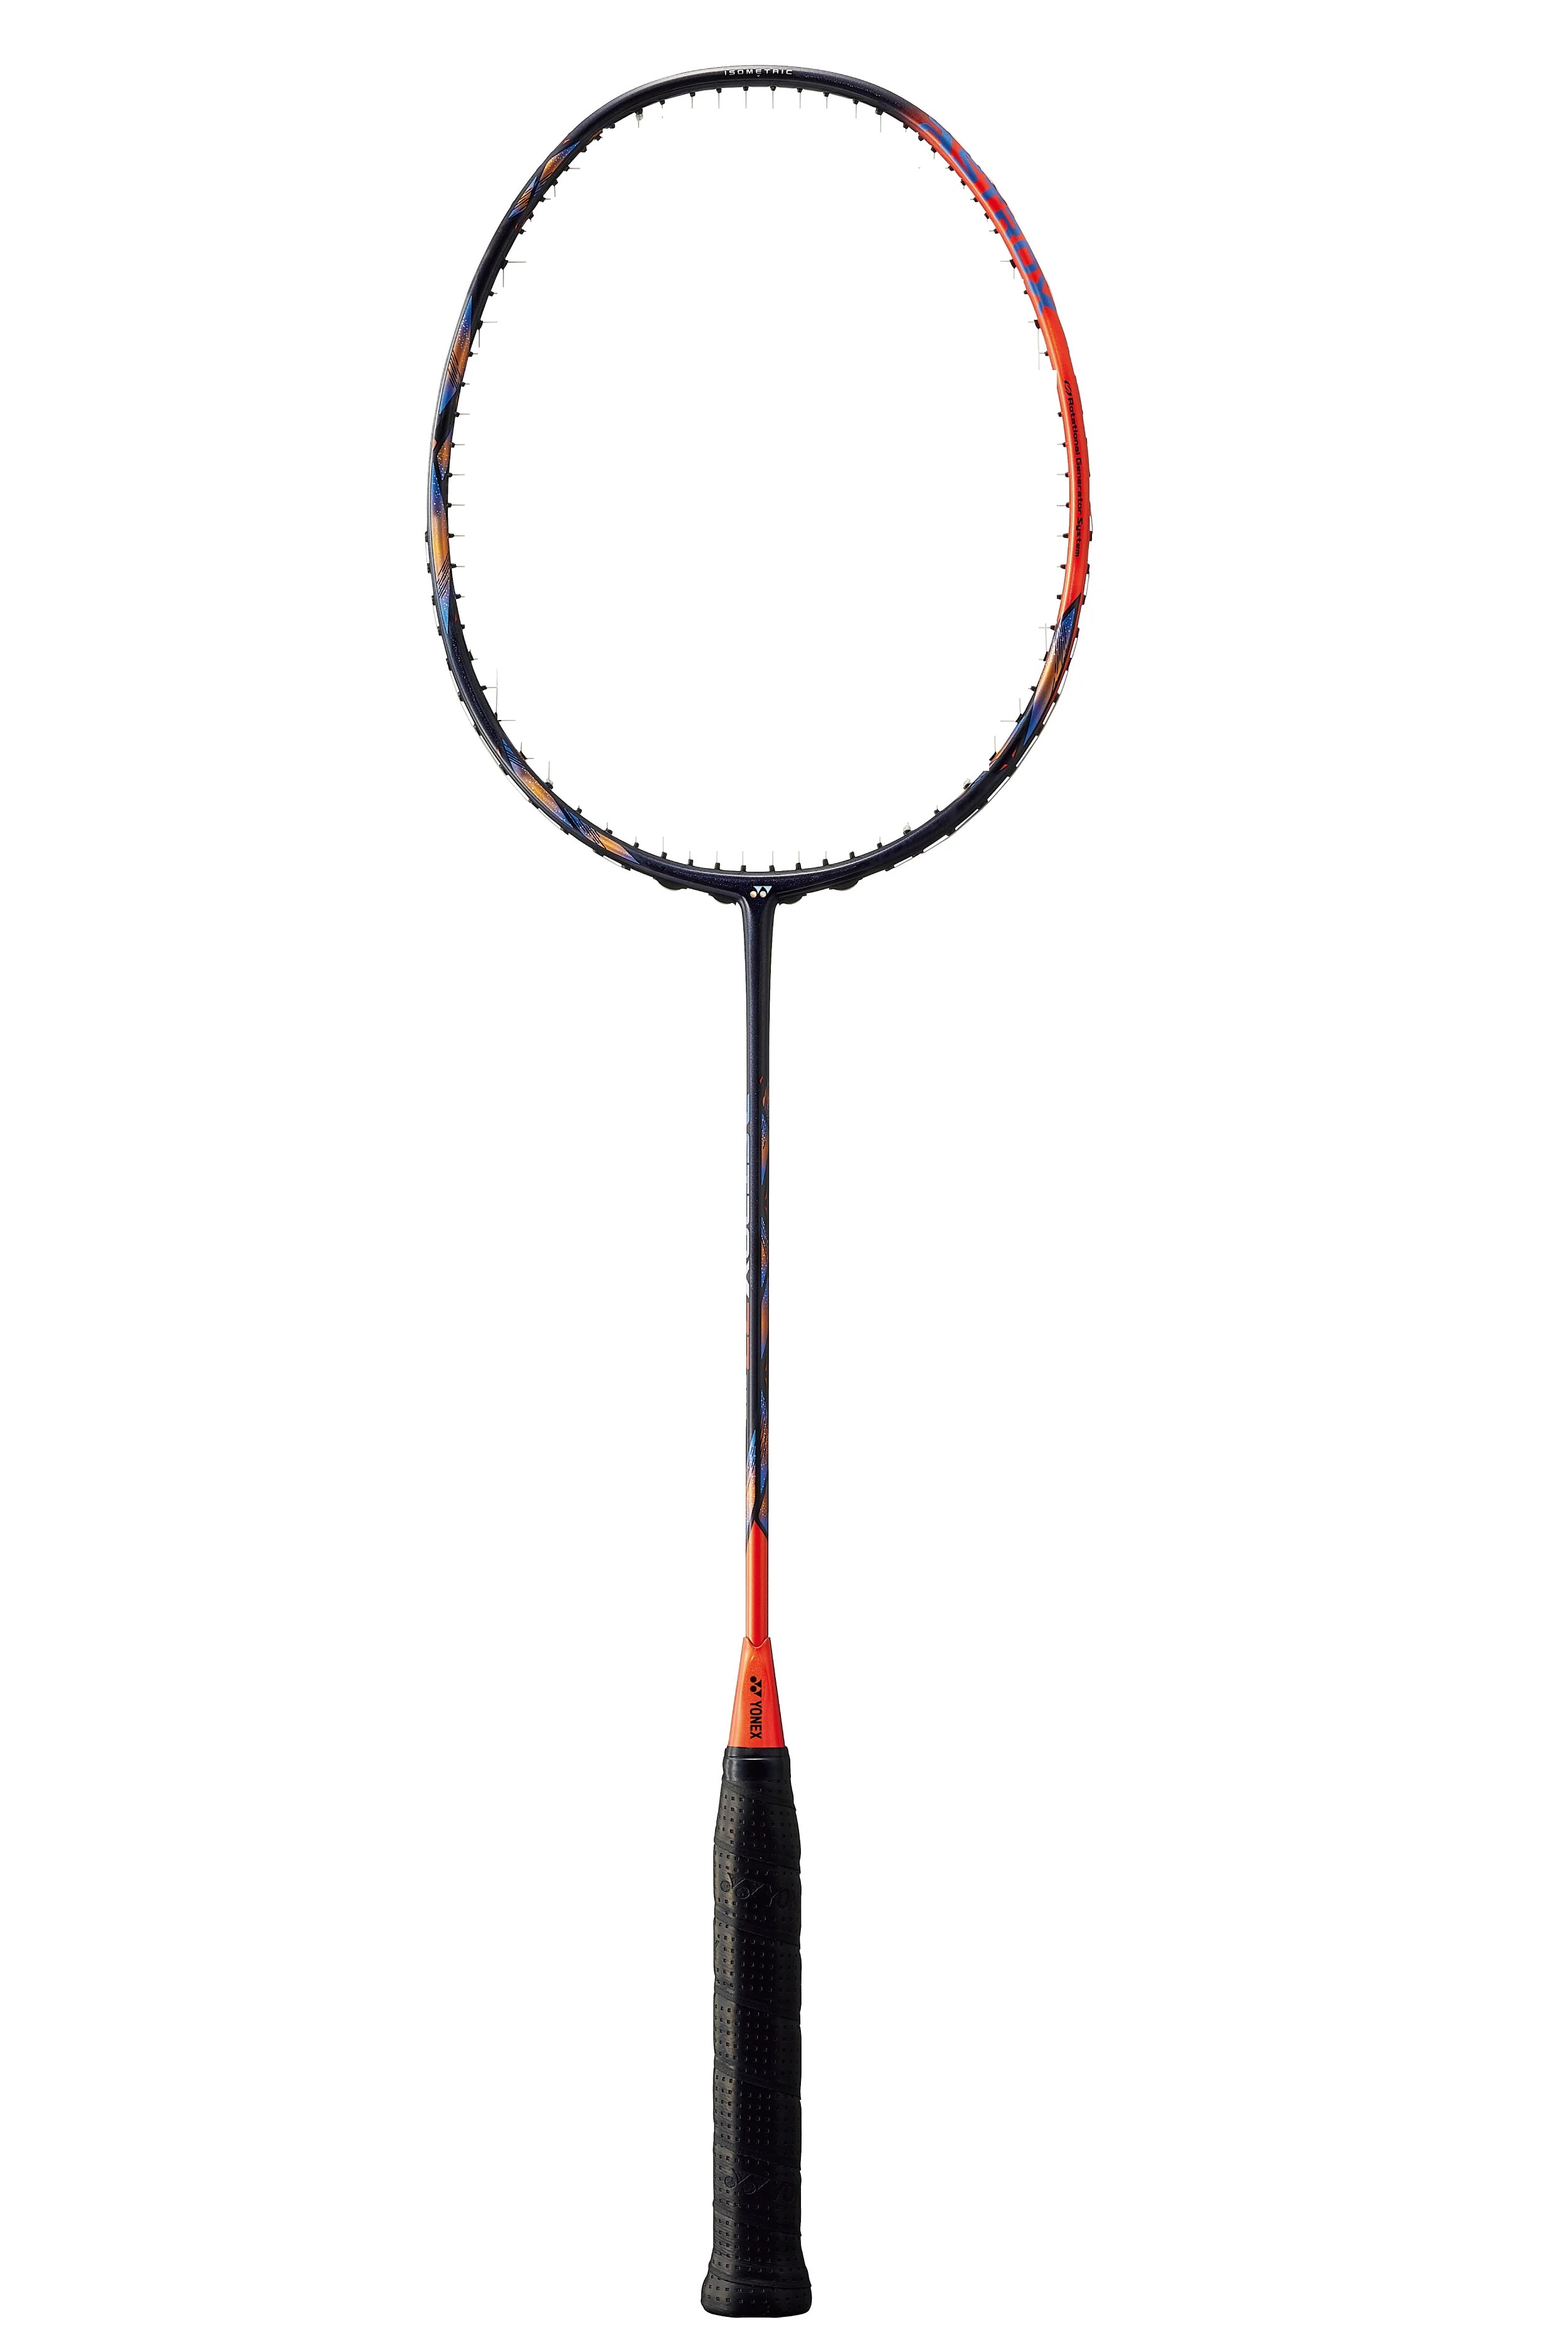 YONEX Astrox 77 PRO Badminton Racquet AX77-P- High Orange - Unstrung Made in Japan